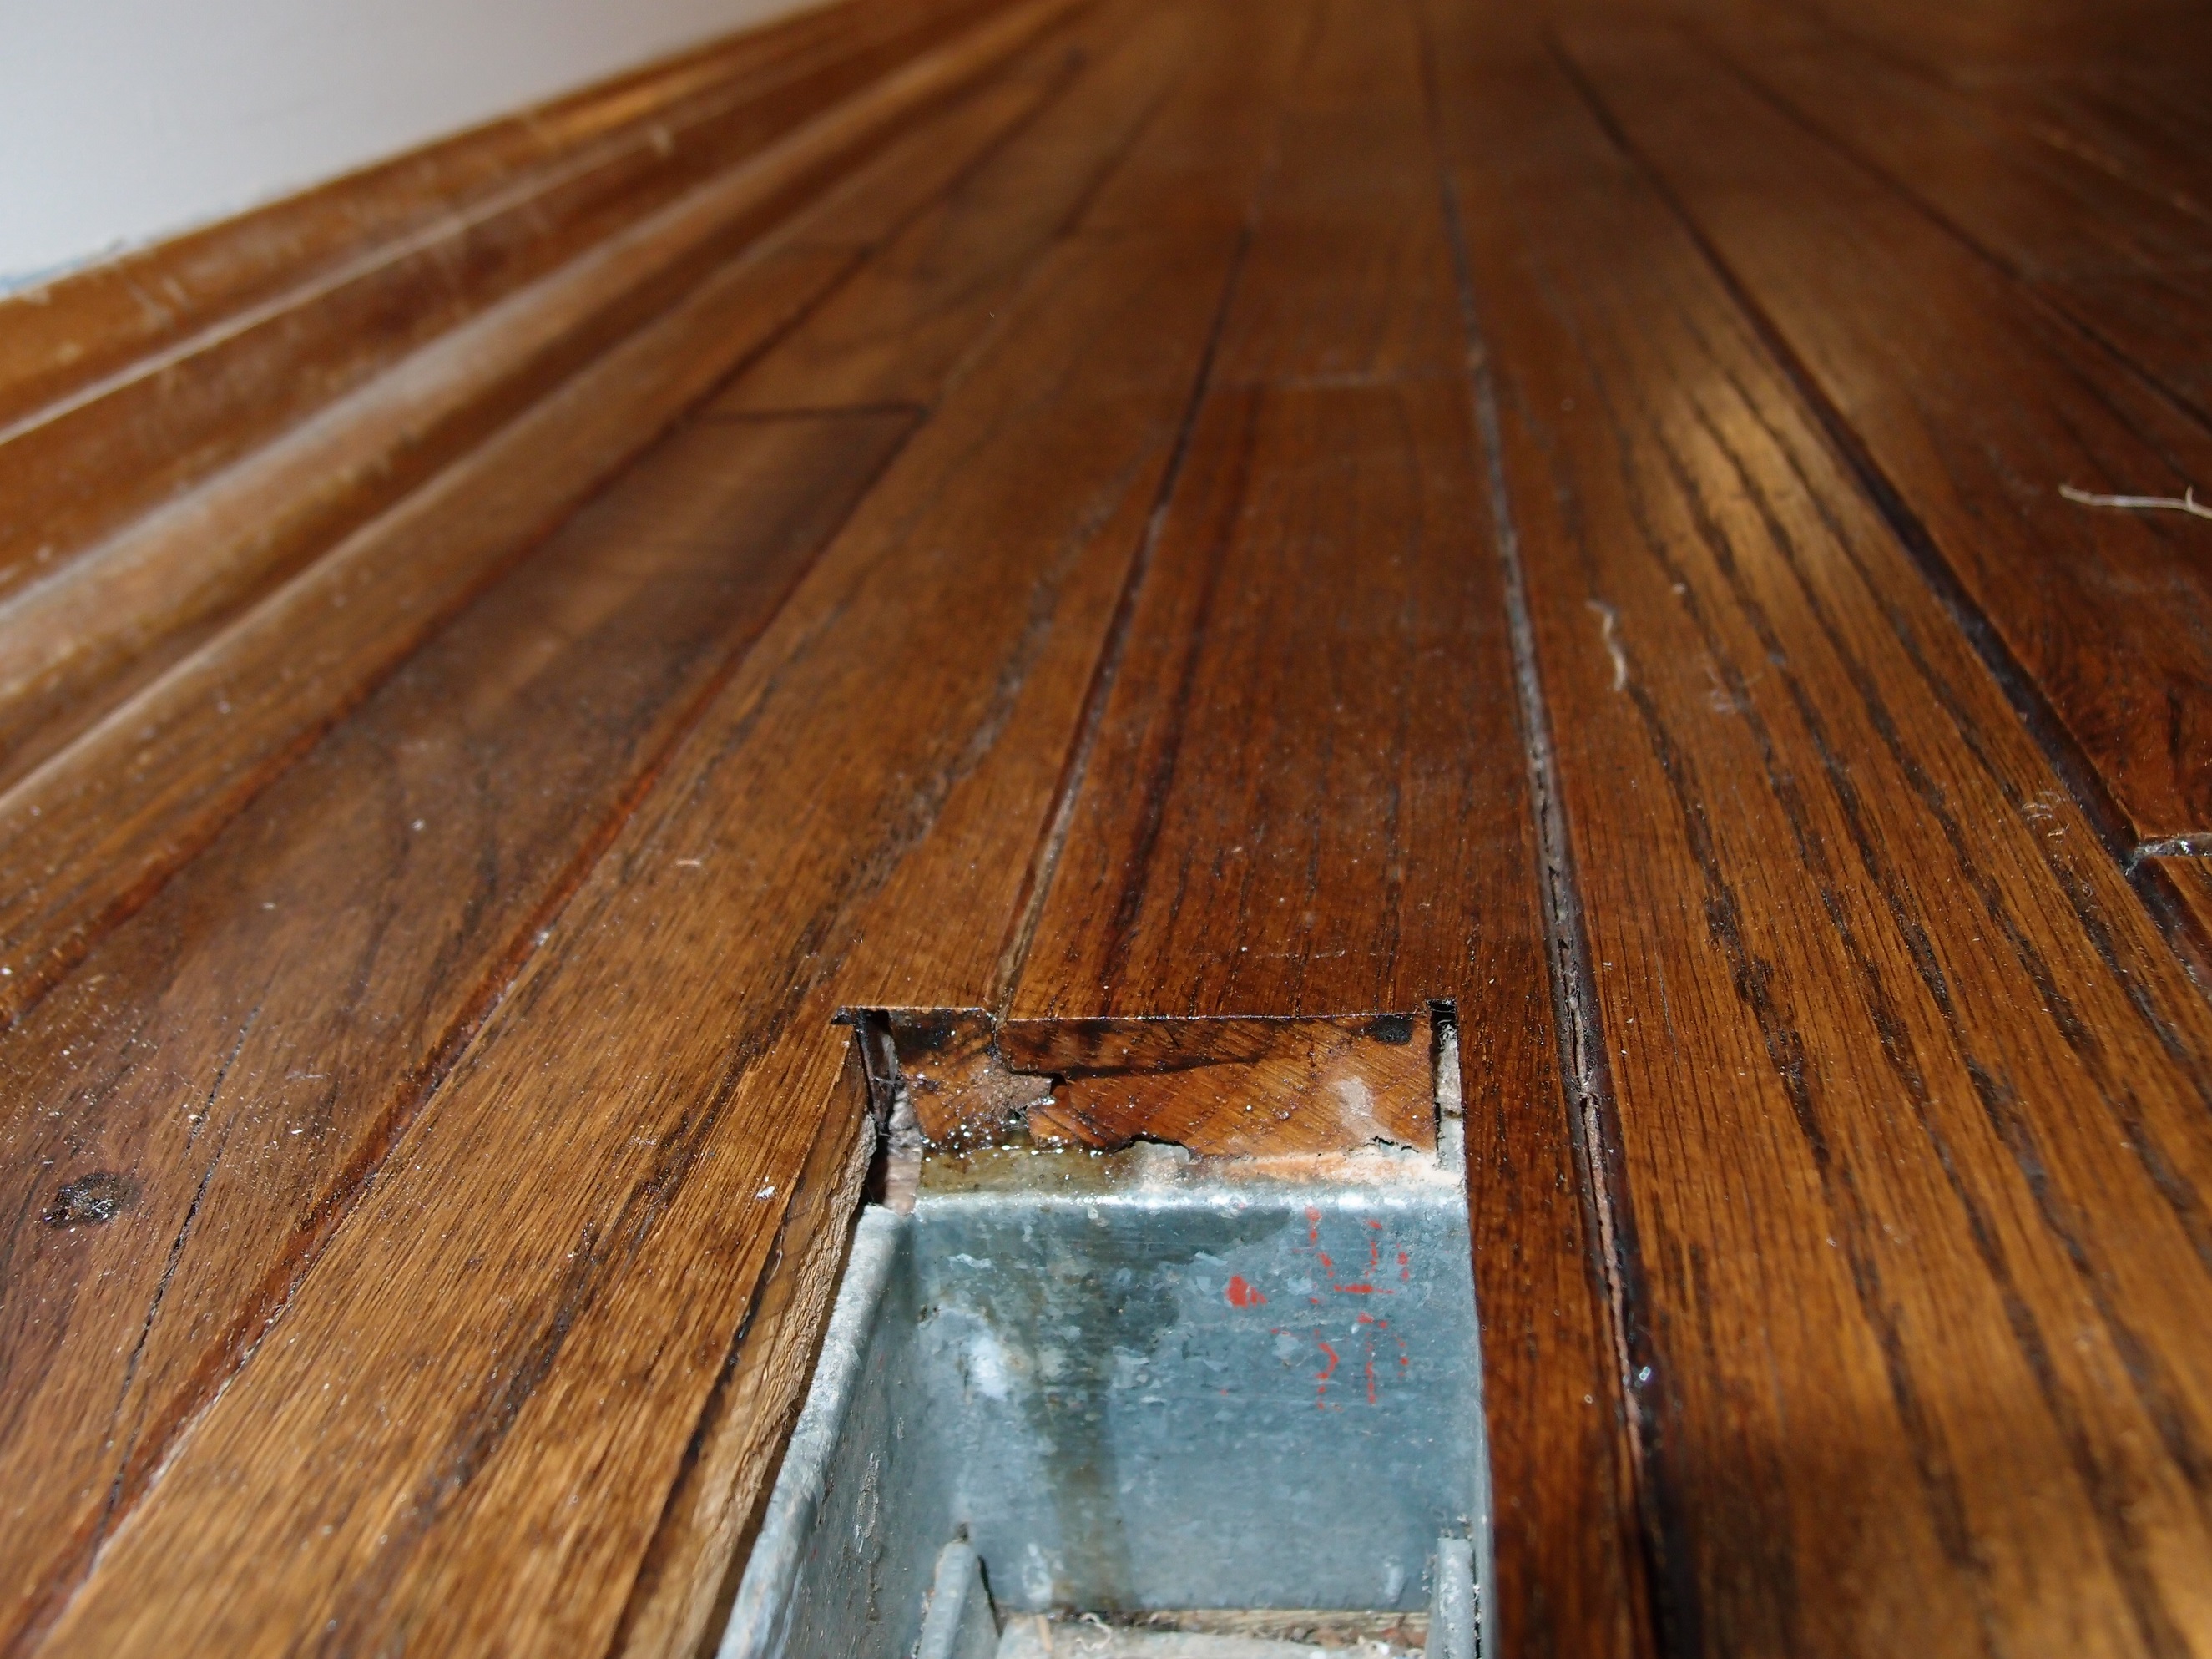 Refinishing Hardwood Floor With Edge, Refinishing Bruce Hardwood Floors